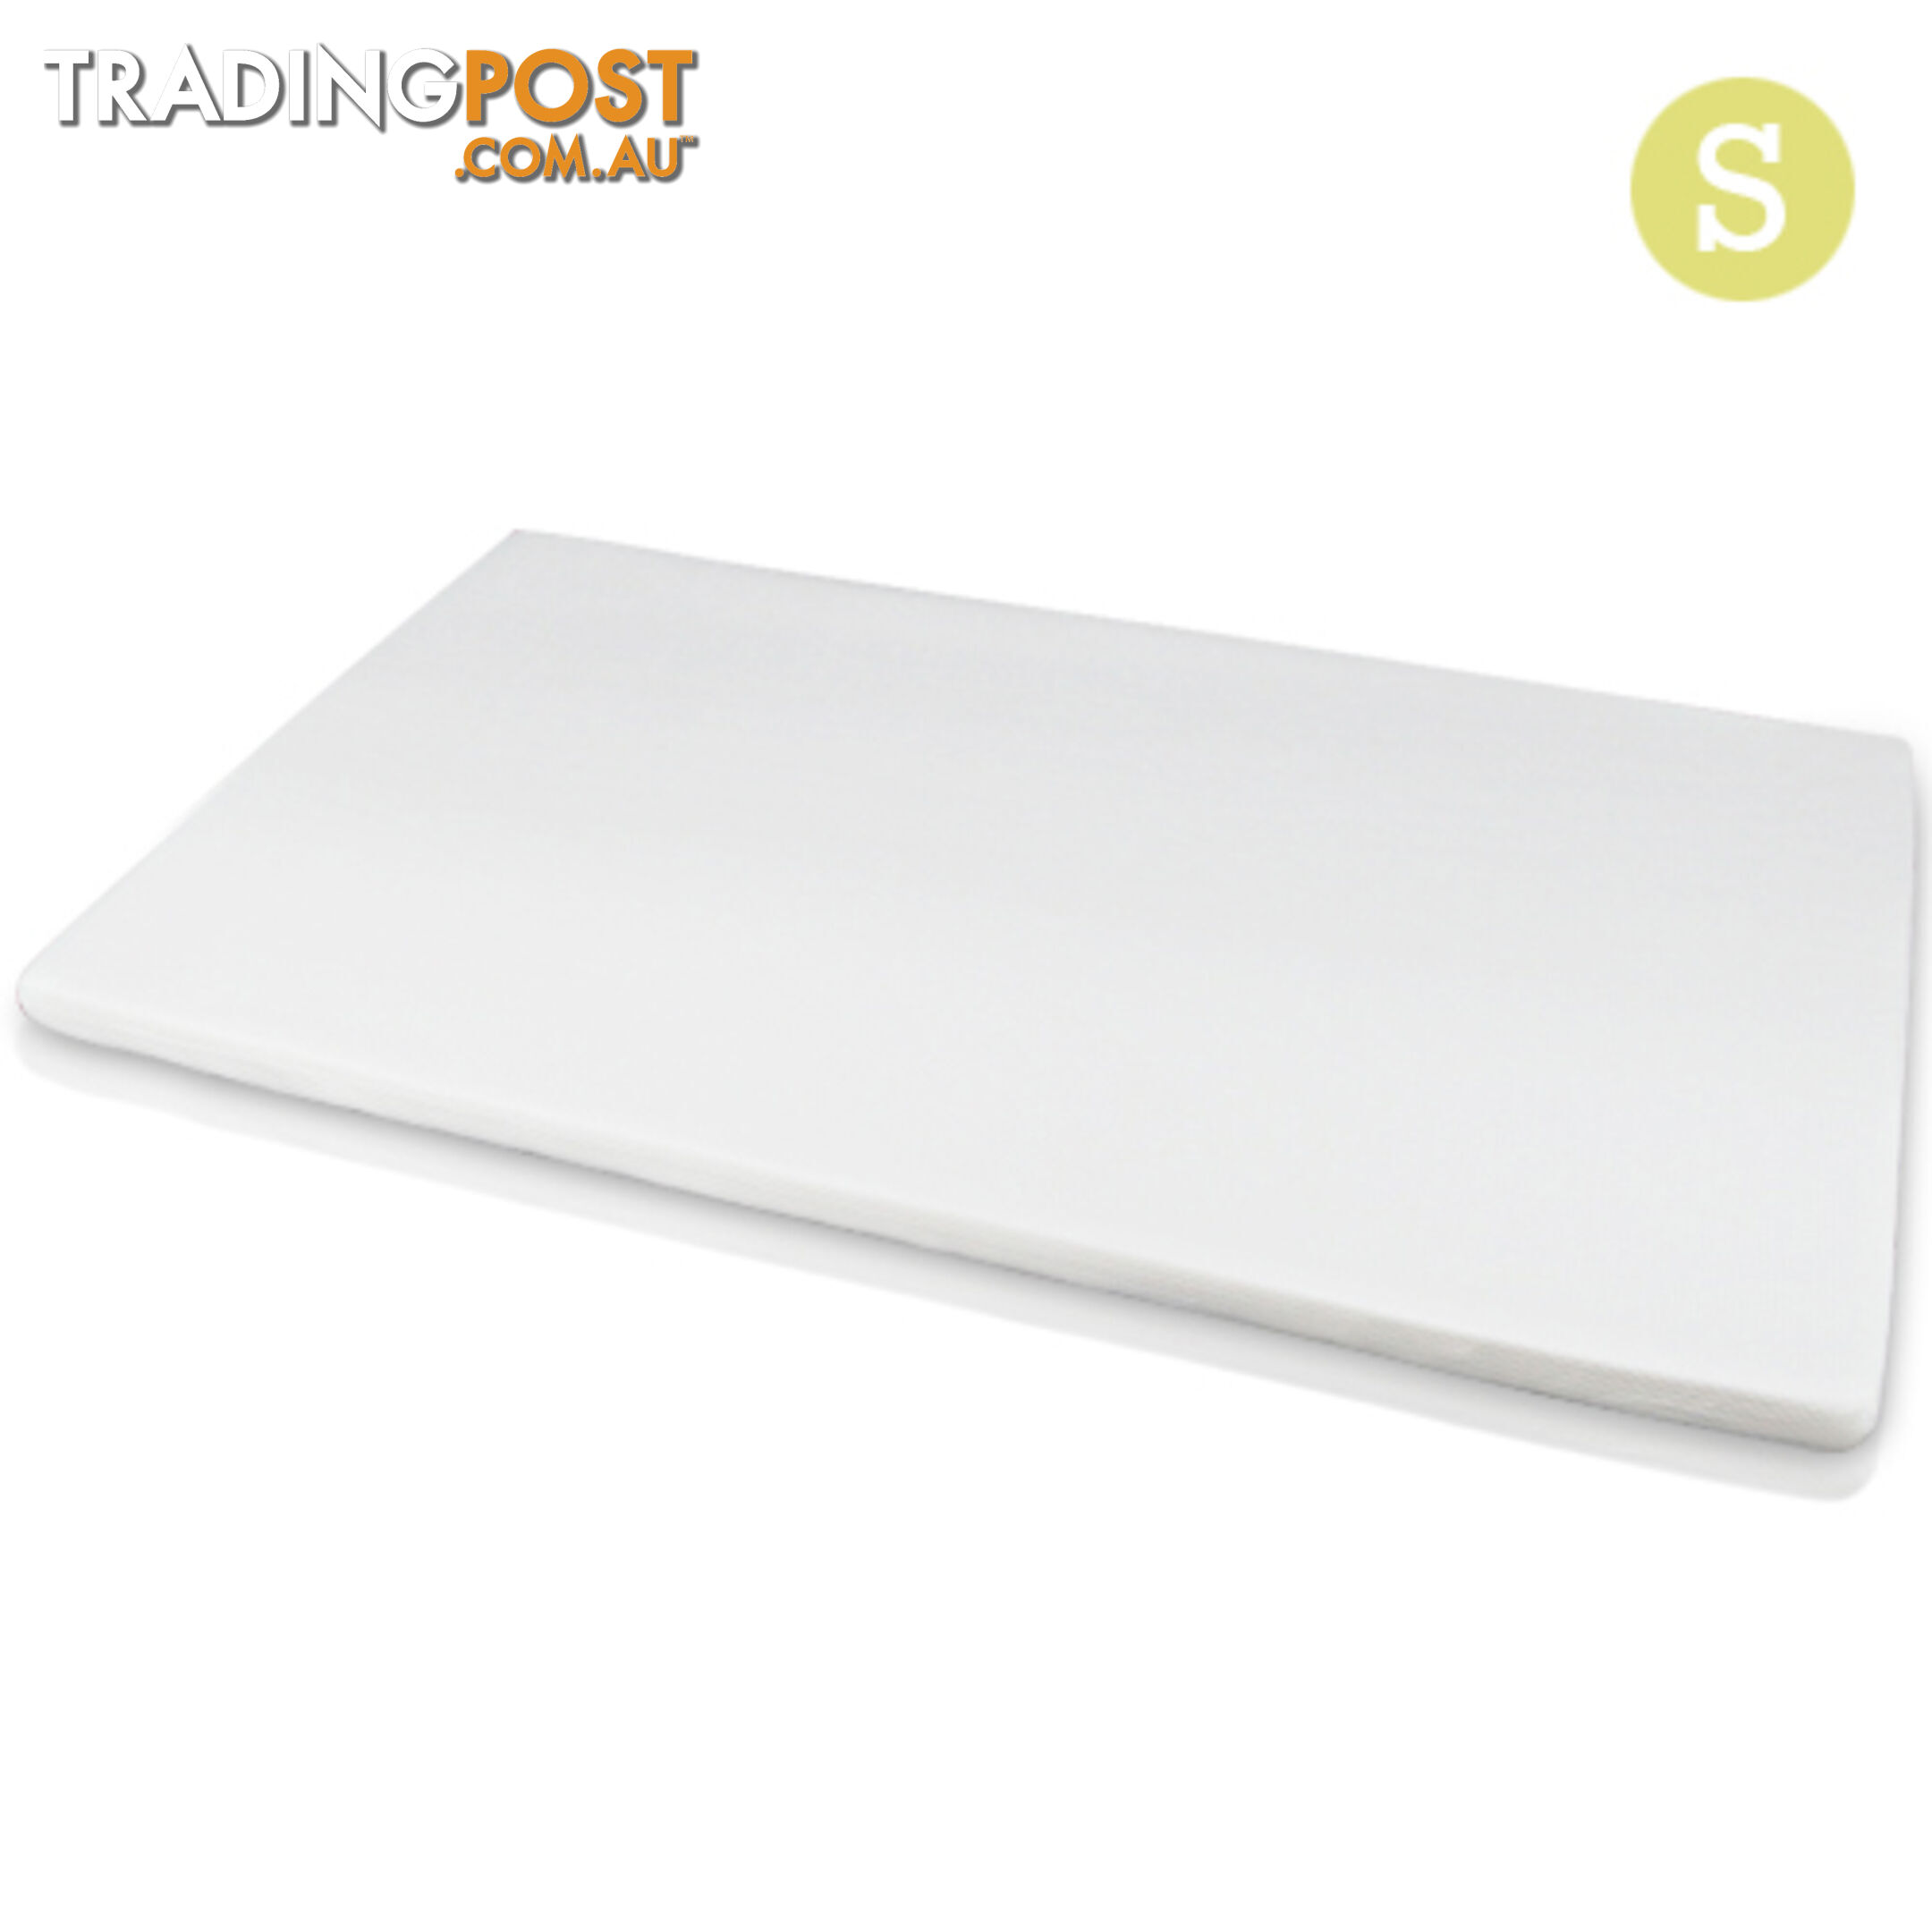 5cm Visco Elastic Memory Foam Mattress Topper Extra High Density Underlay Single